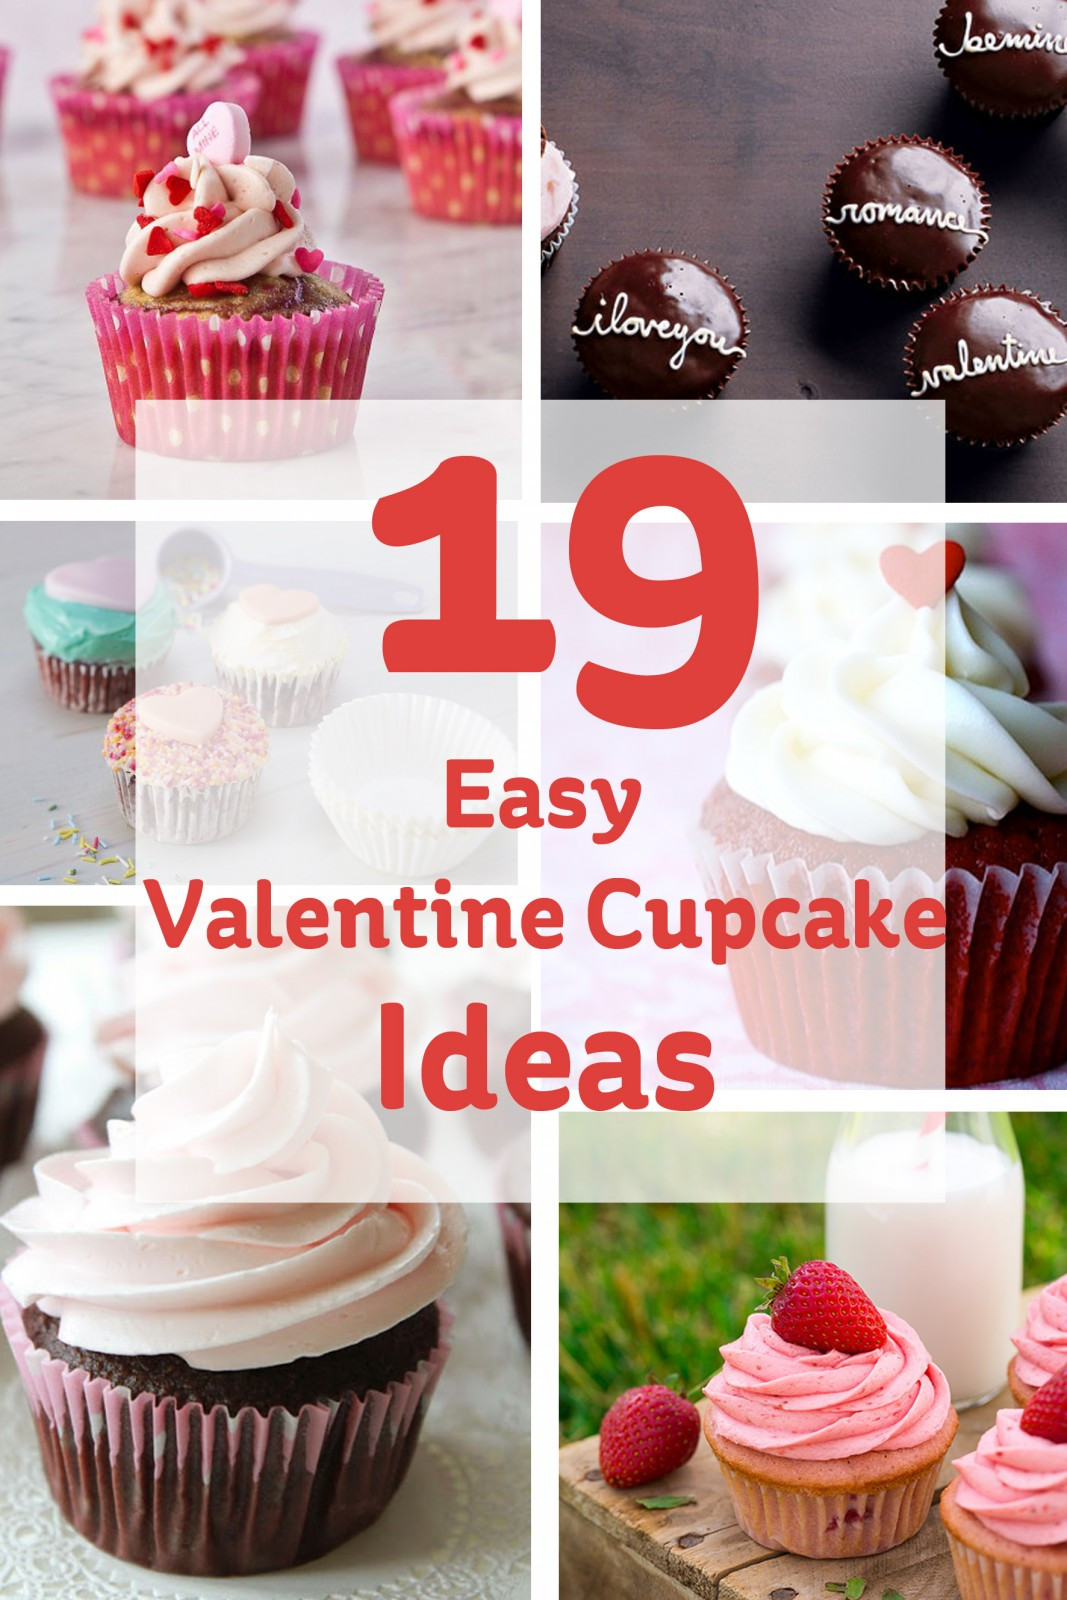 Valentine Cupcakes Pinterest
 19 Easy Valentine Cupcake Ideas Hobbycraft Blog